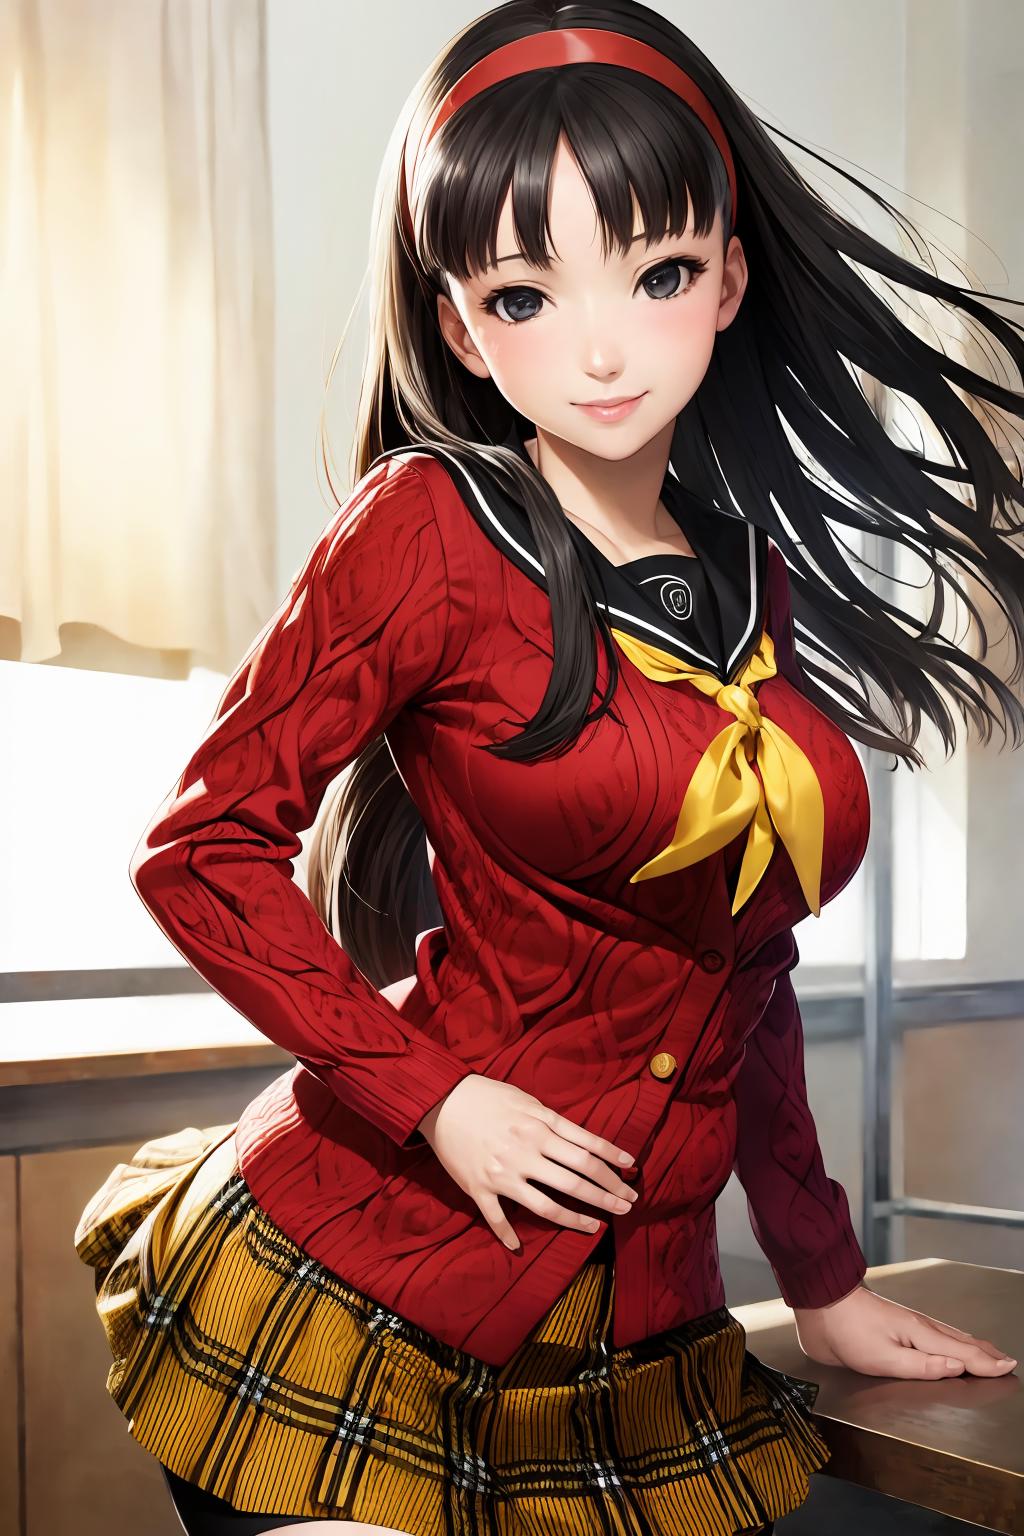 Yukiko amagi (Persona 4) image by ngsm000